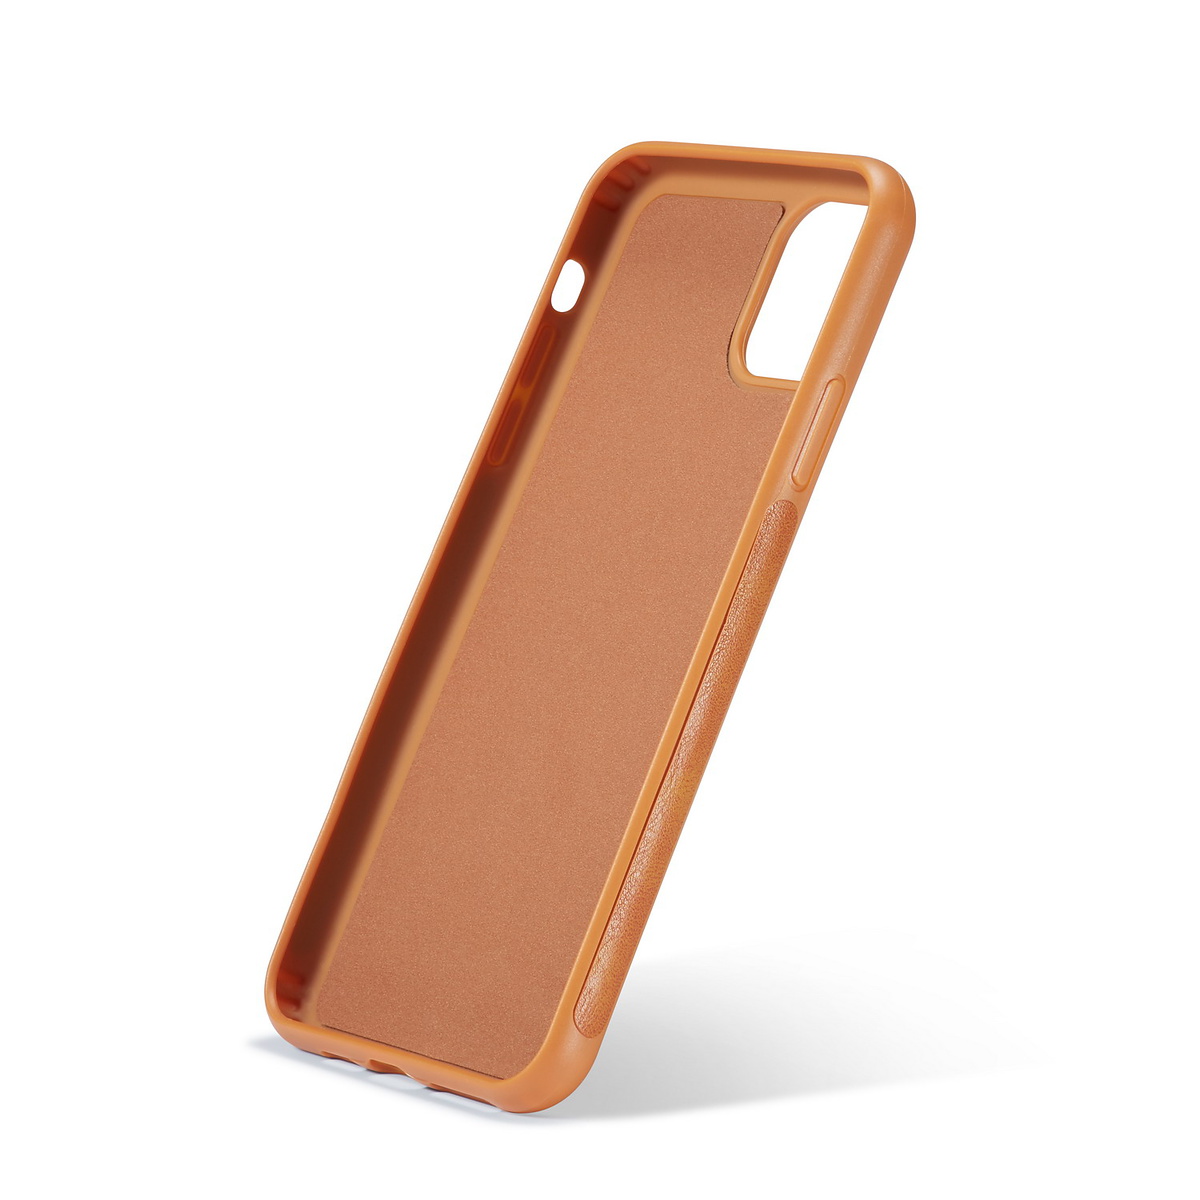 BRG Luxury plånboksfodral med ställ, iPhone 11, brun